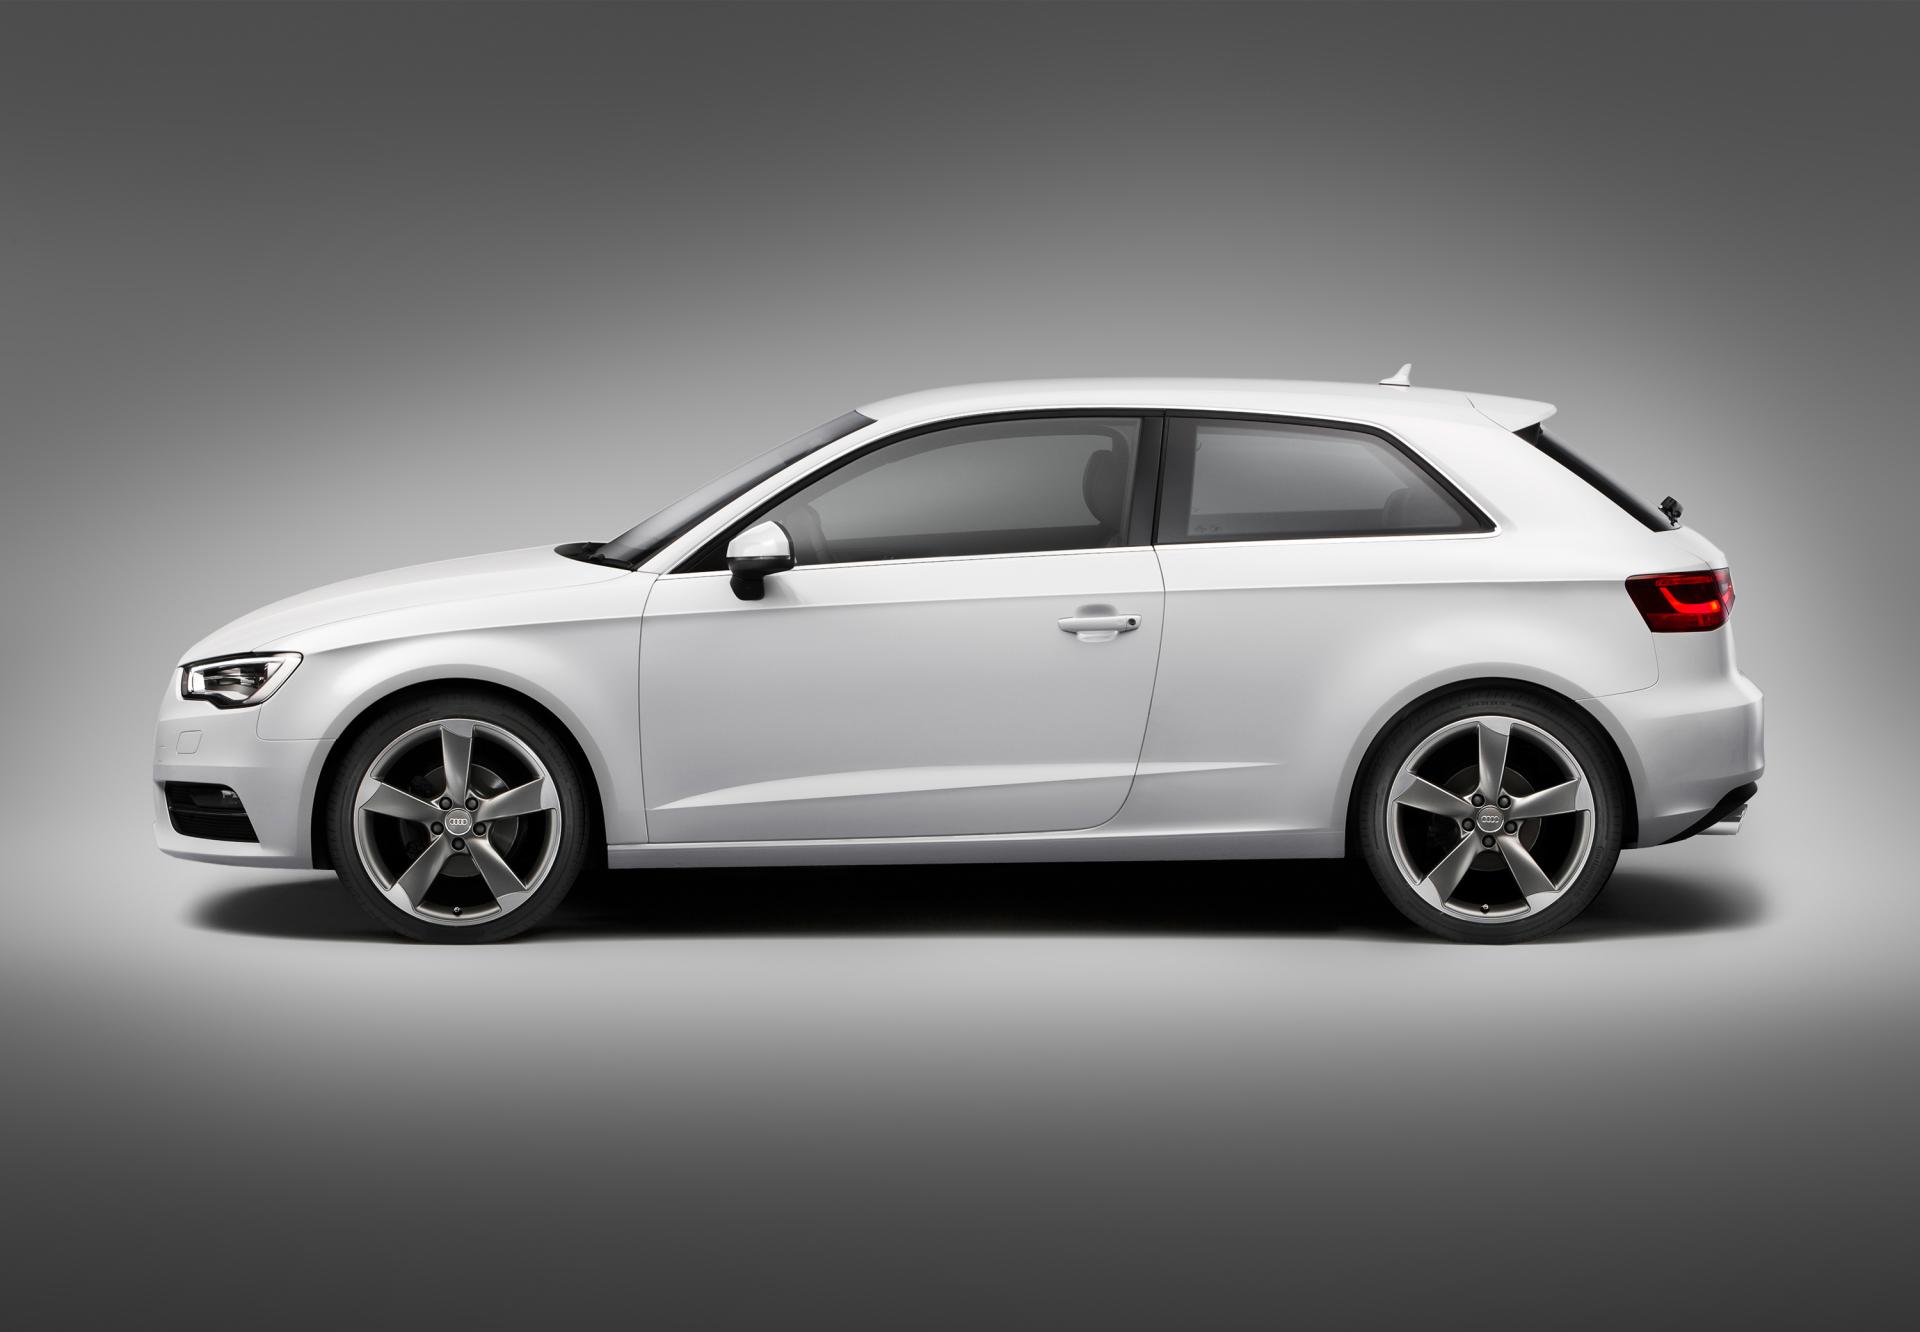 2013 Audi A3 News and Information - conceptcarz.com